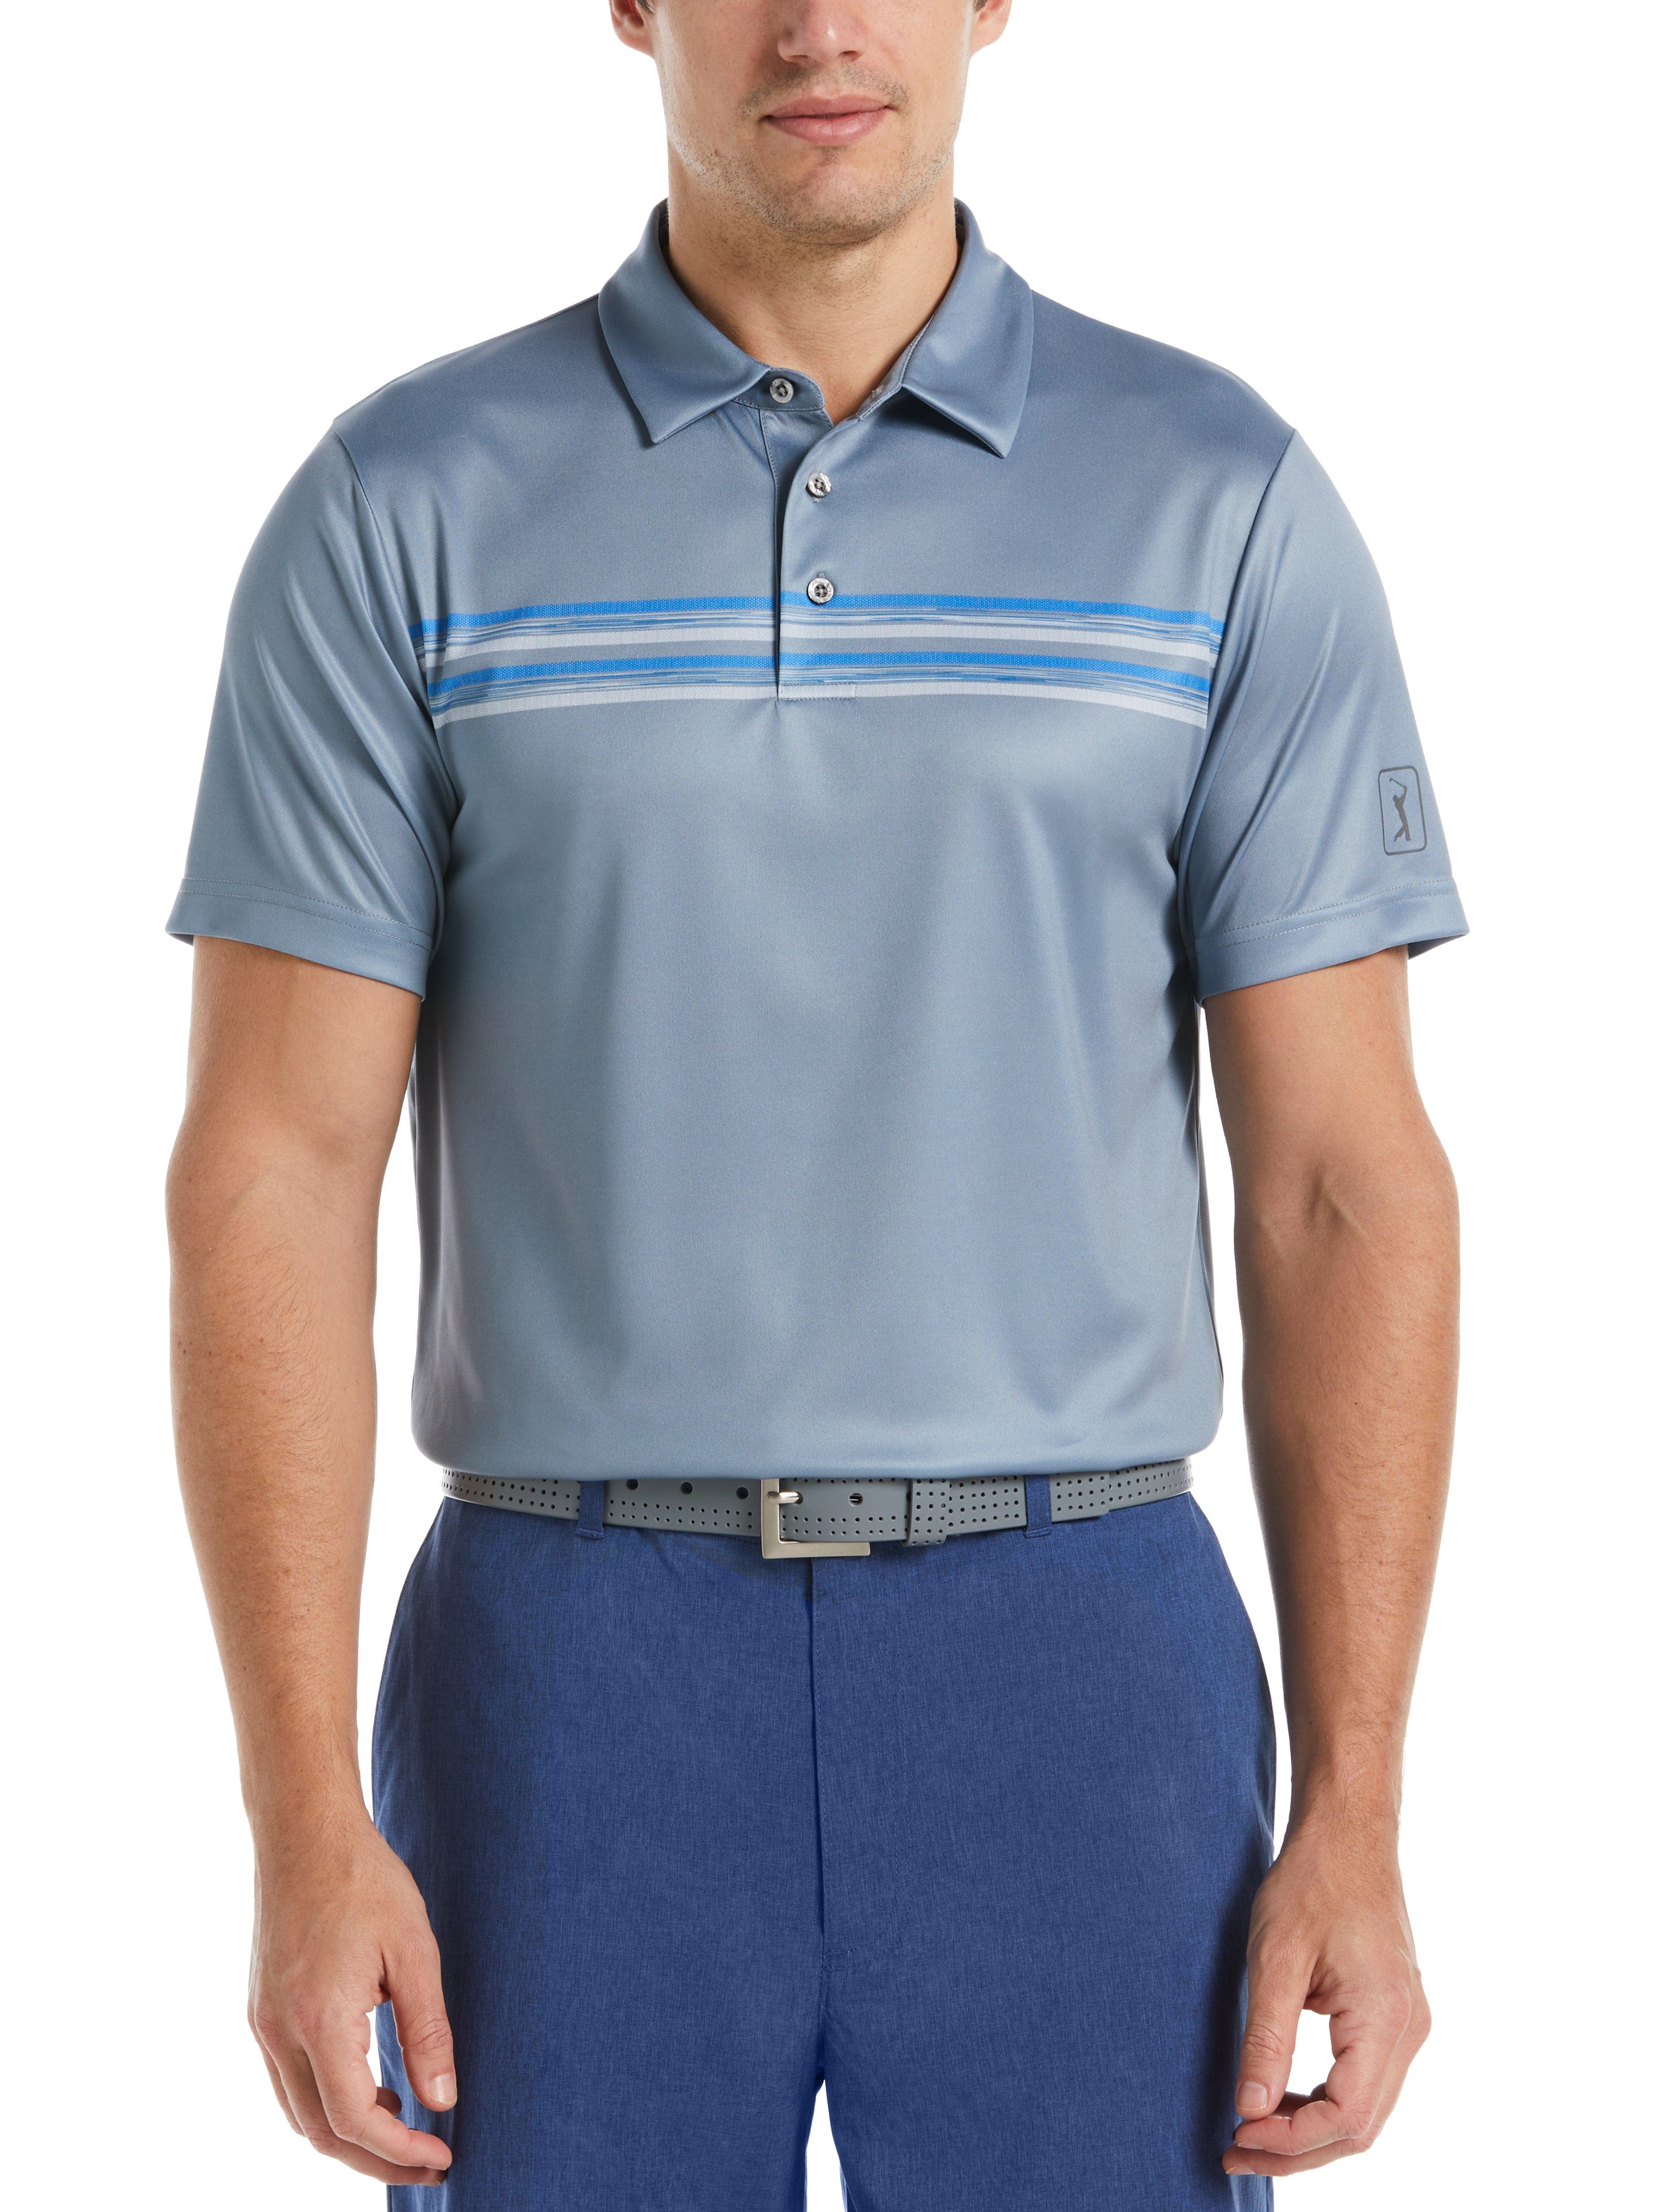 PGA TOUR Apparel Mens Chest Stripe Golf Polo Shirt, Size Large, Tradewinds Gray, 100% Polyester | Golf Apparel Shop